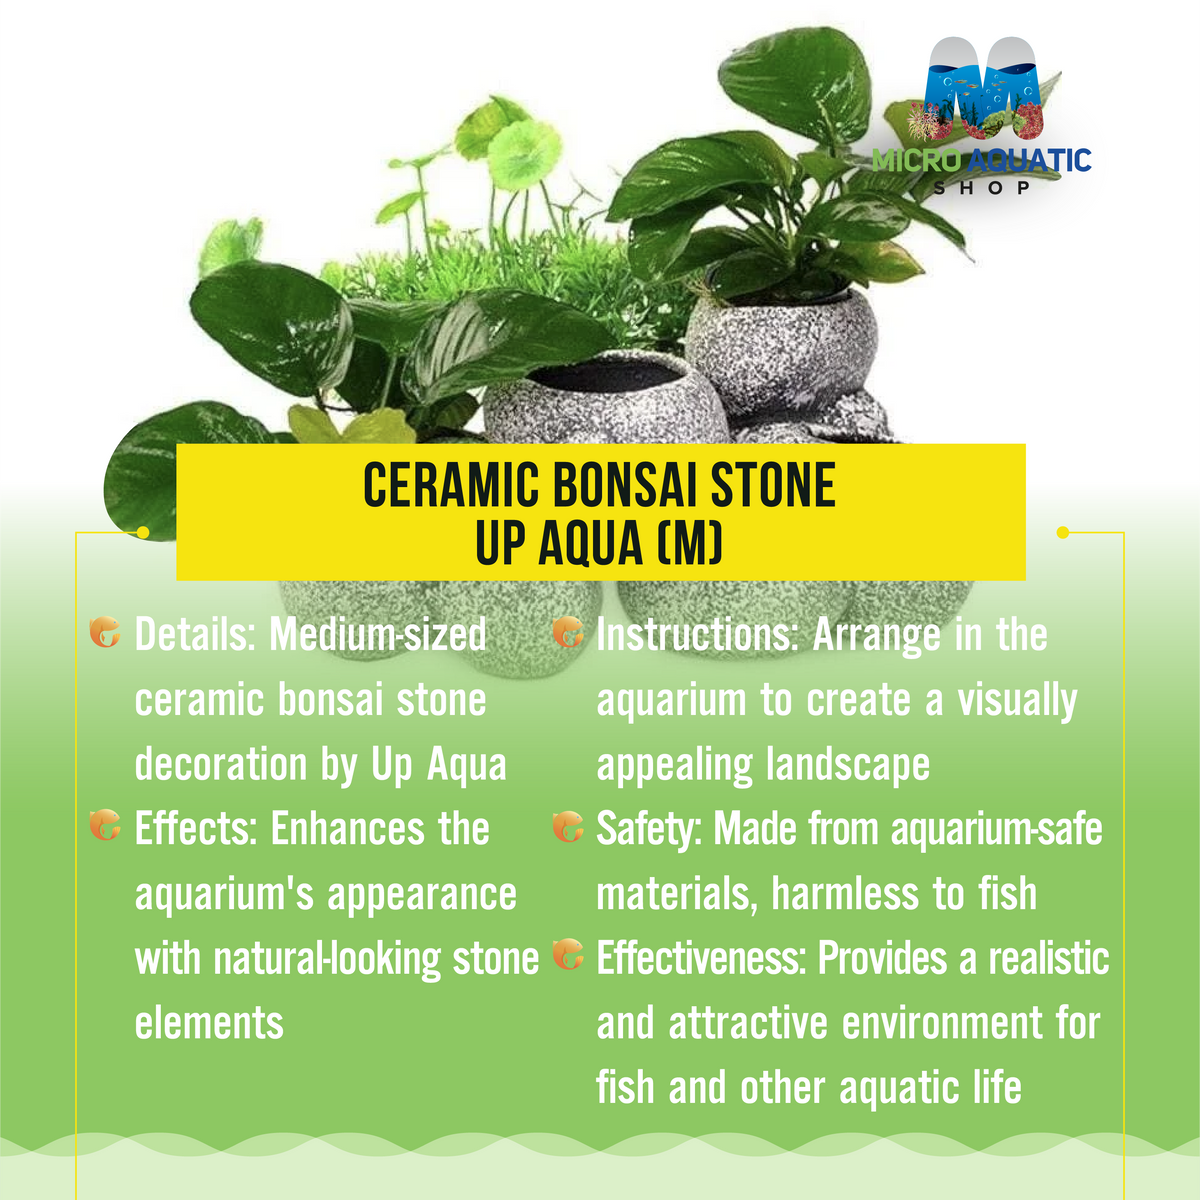 Ceramic Bonsai Stone Up Aqua (M)